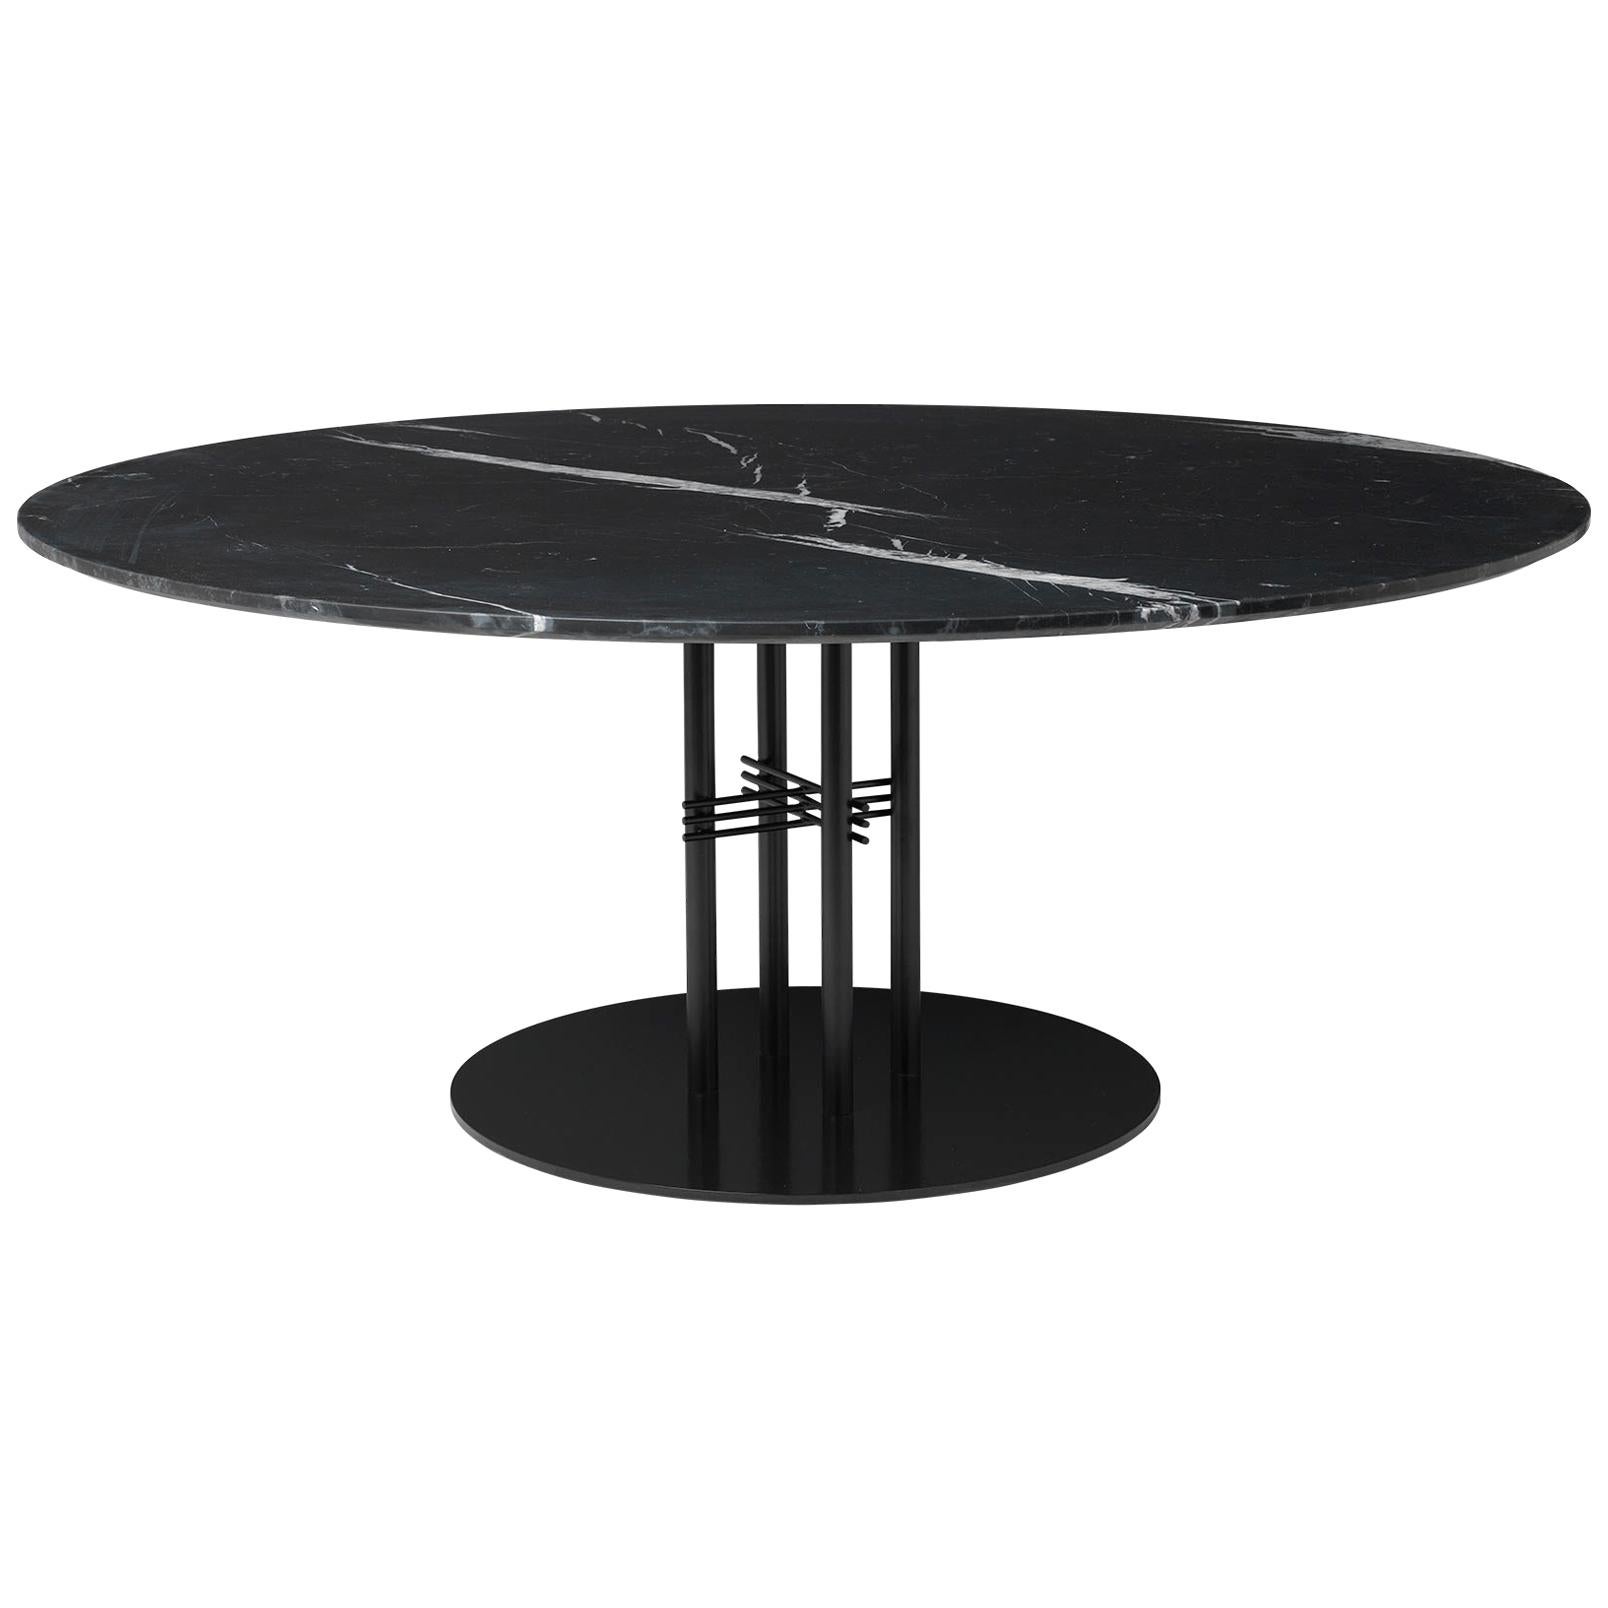 TS Column Lounge Table, Round, Black Base, Large, Marble